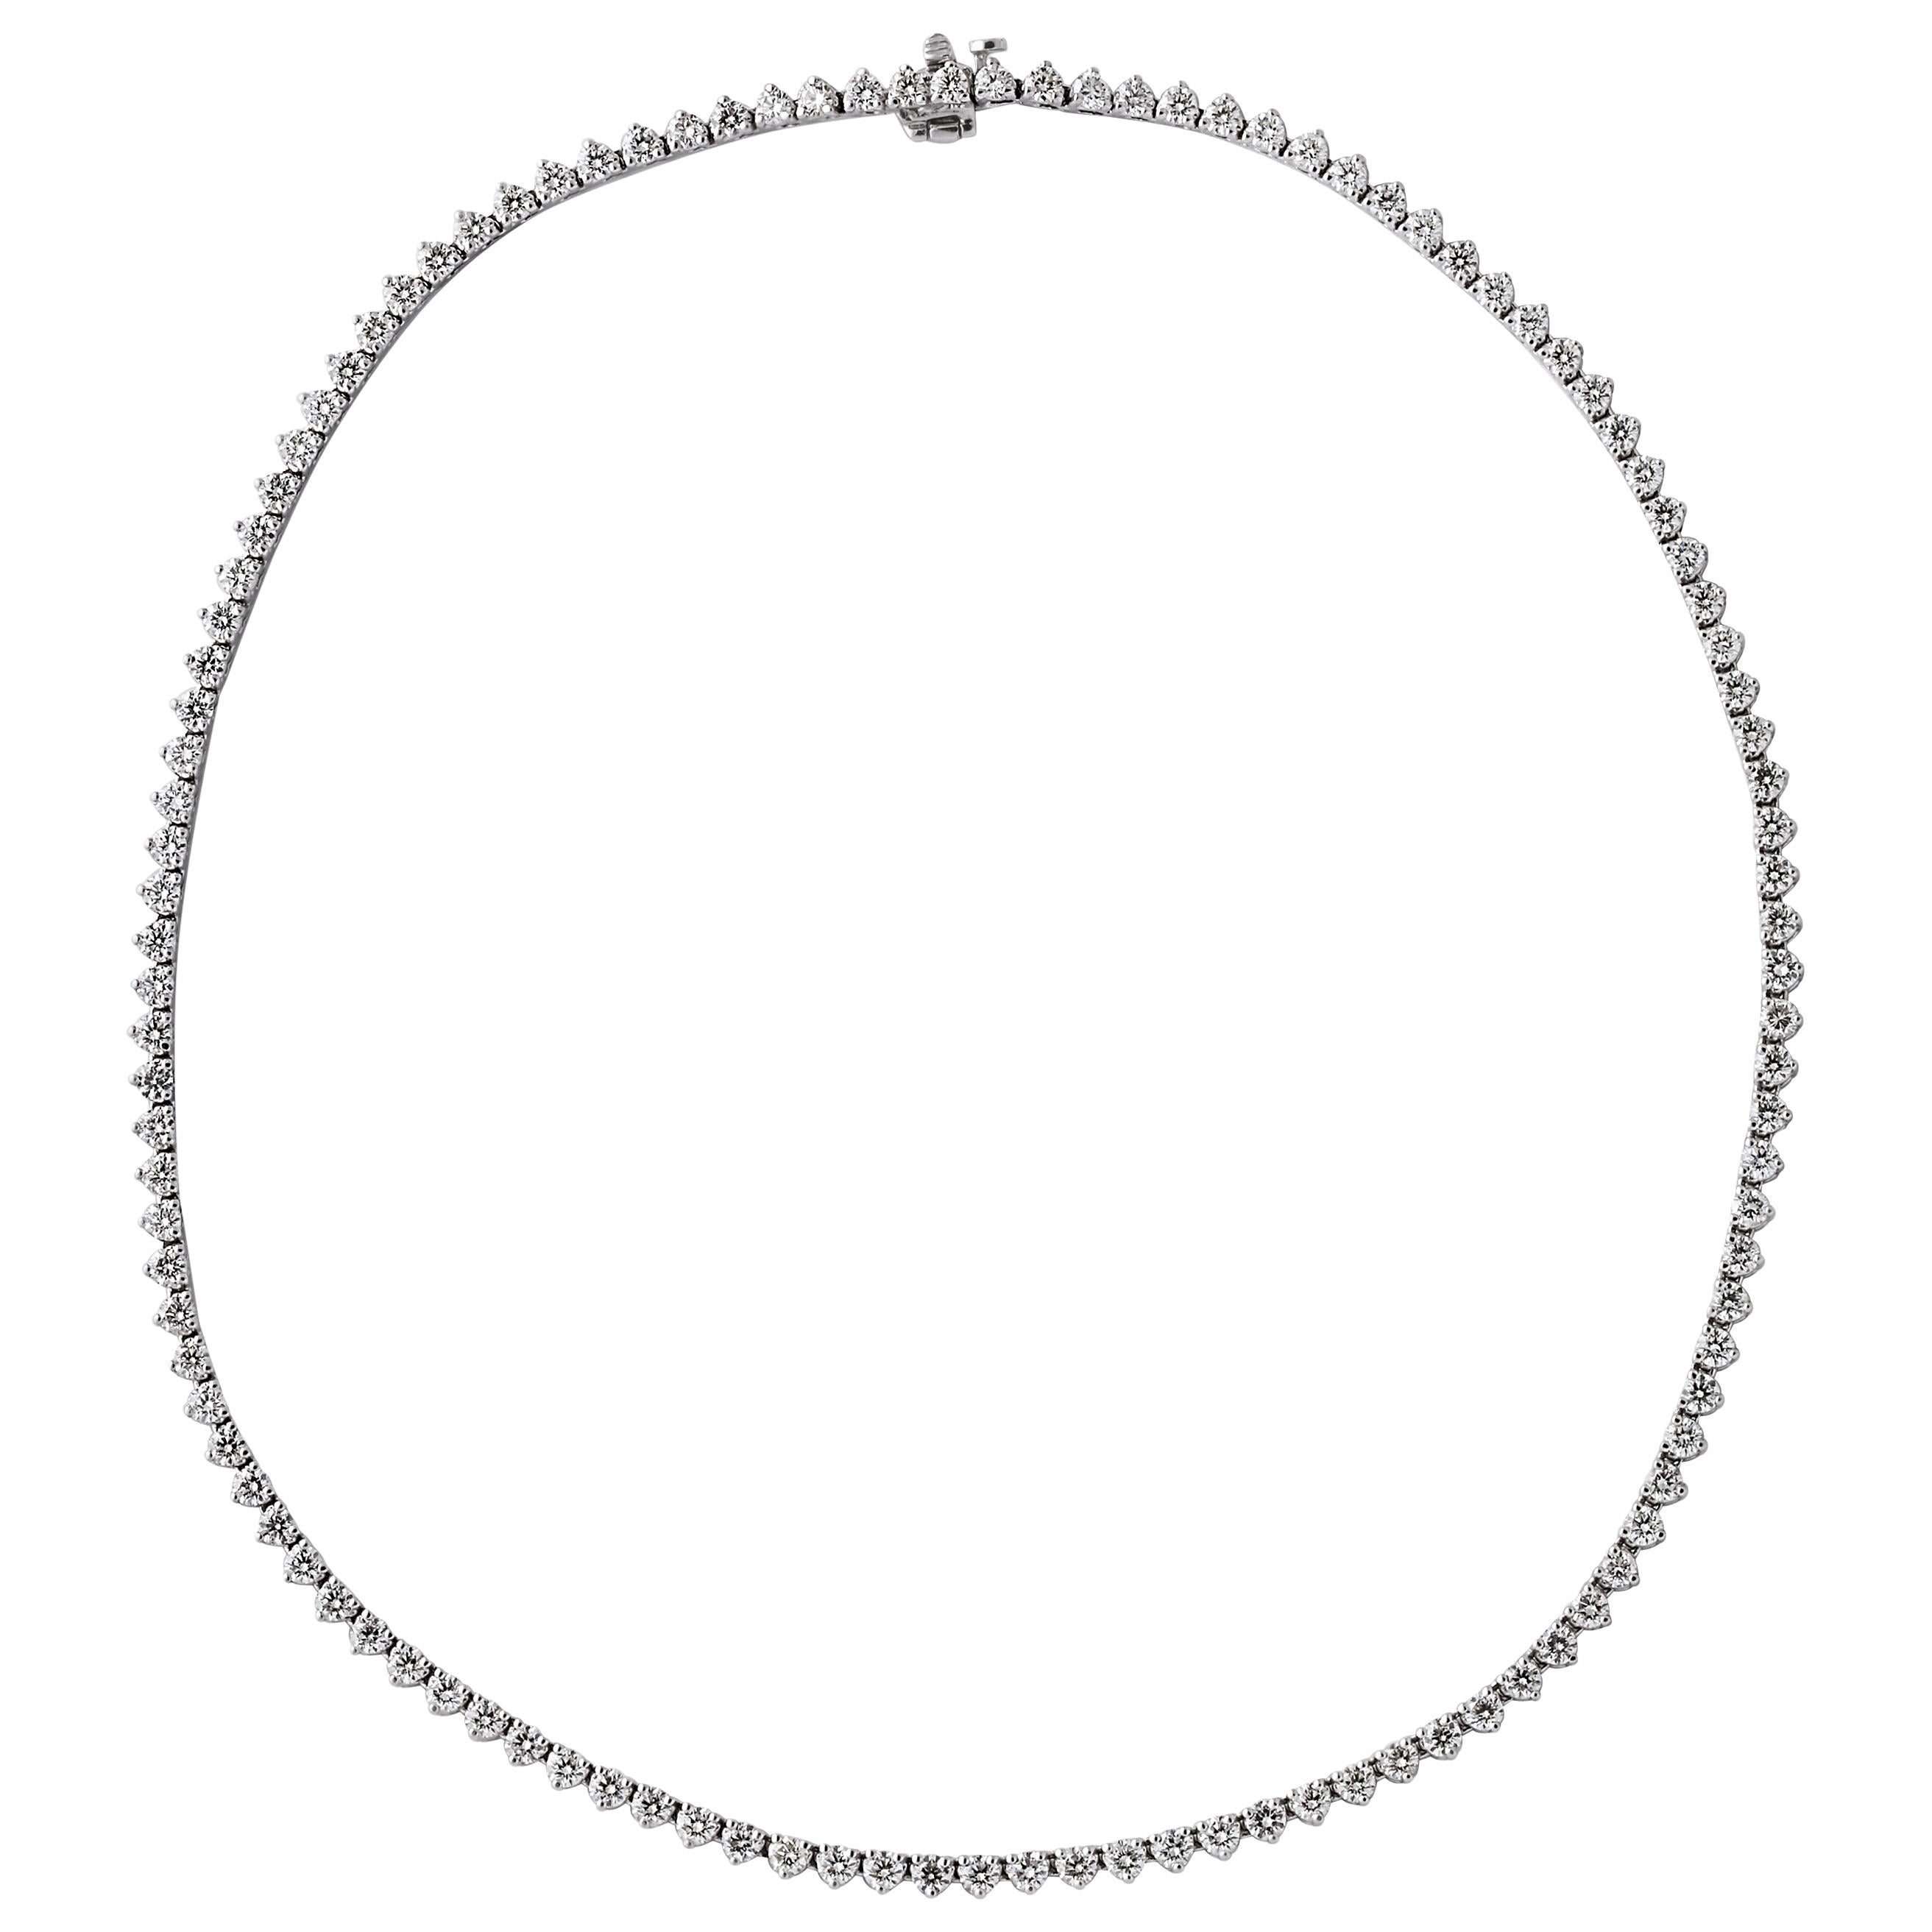 11 Carat Diamond Tennis Necklace